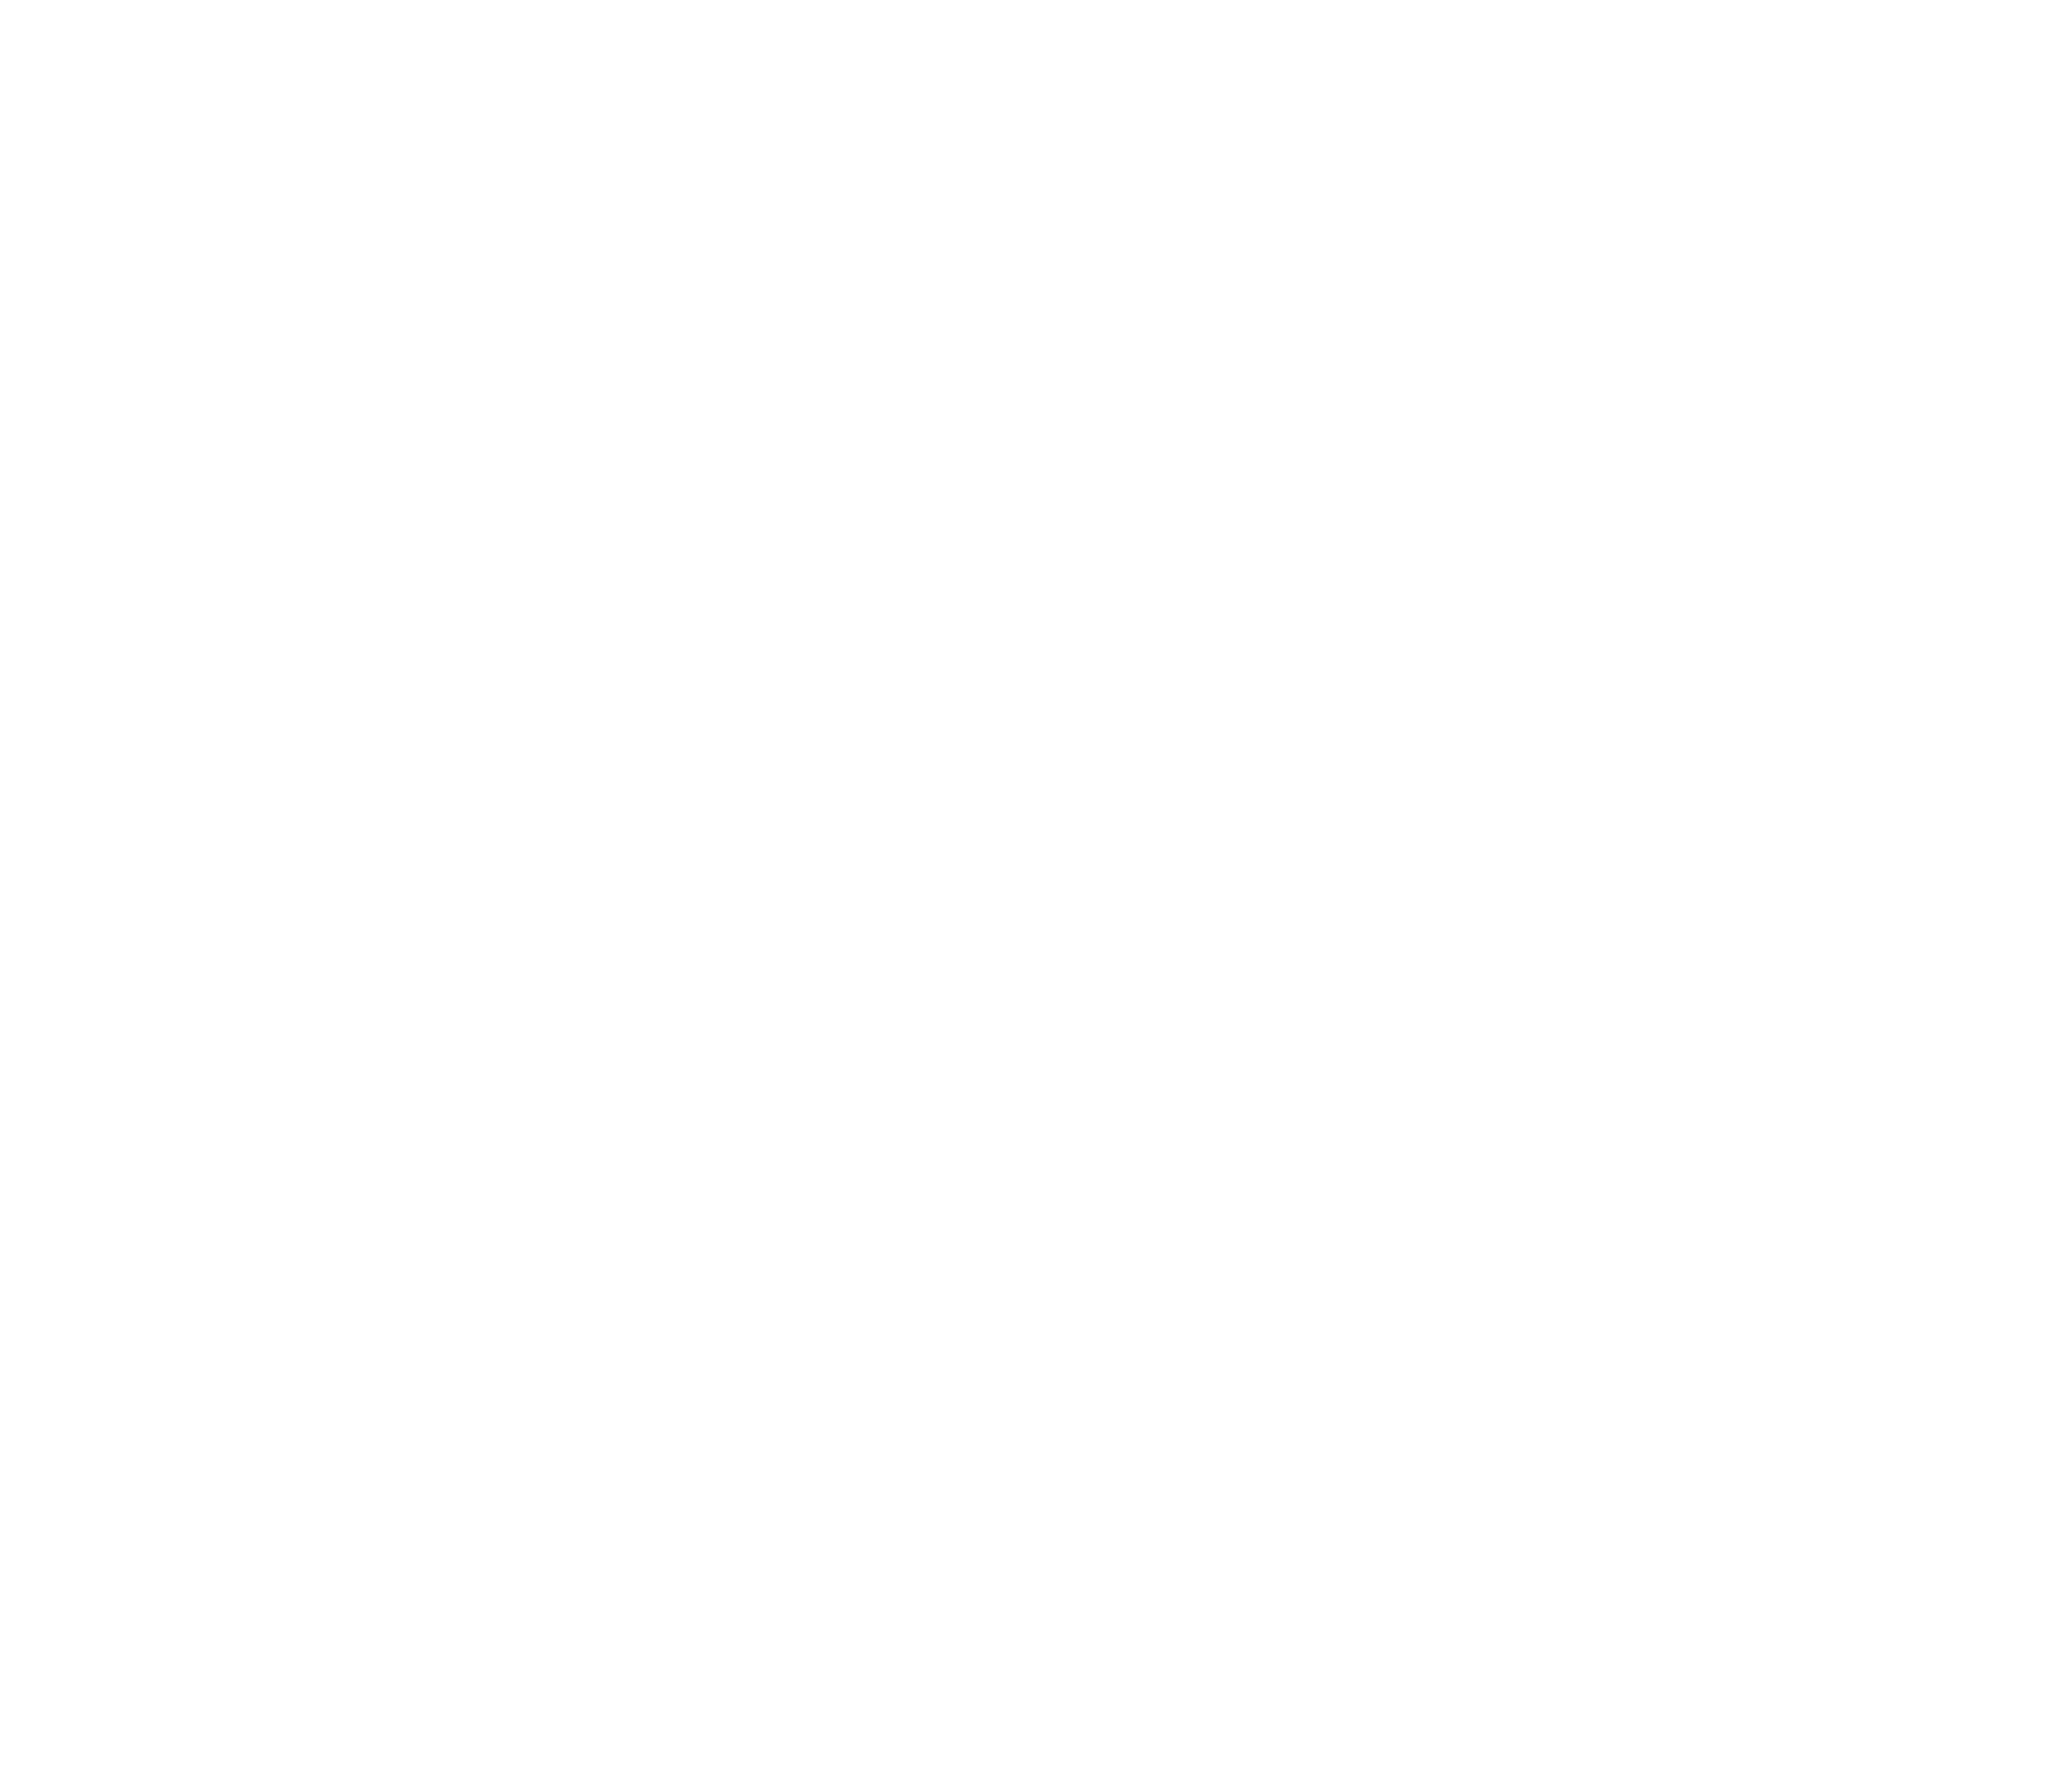 Mallaskoski Brewery